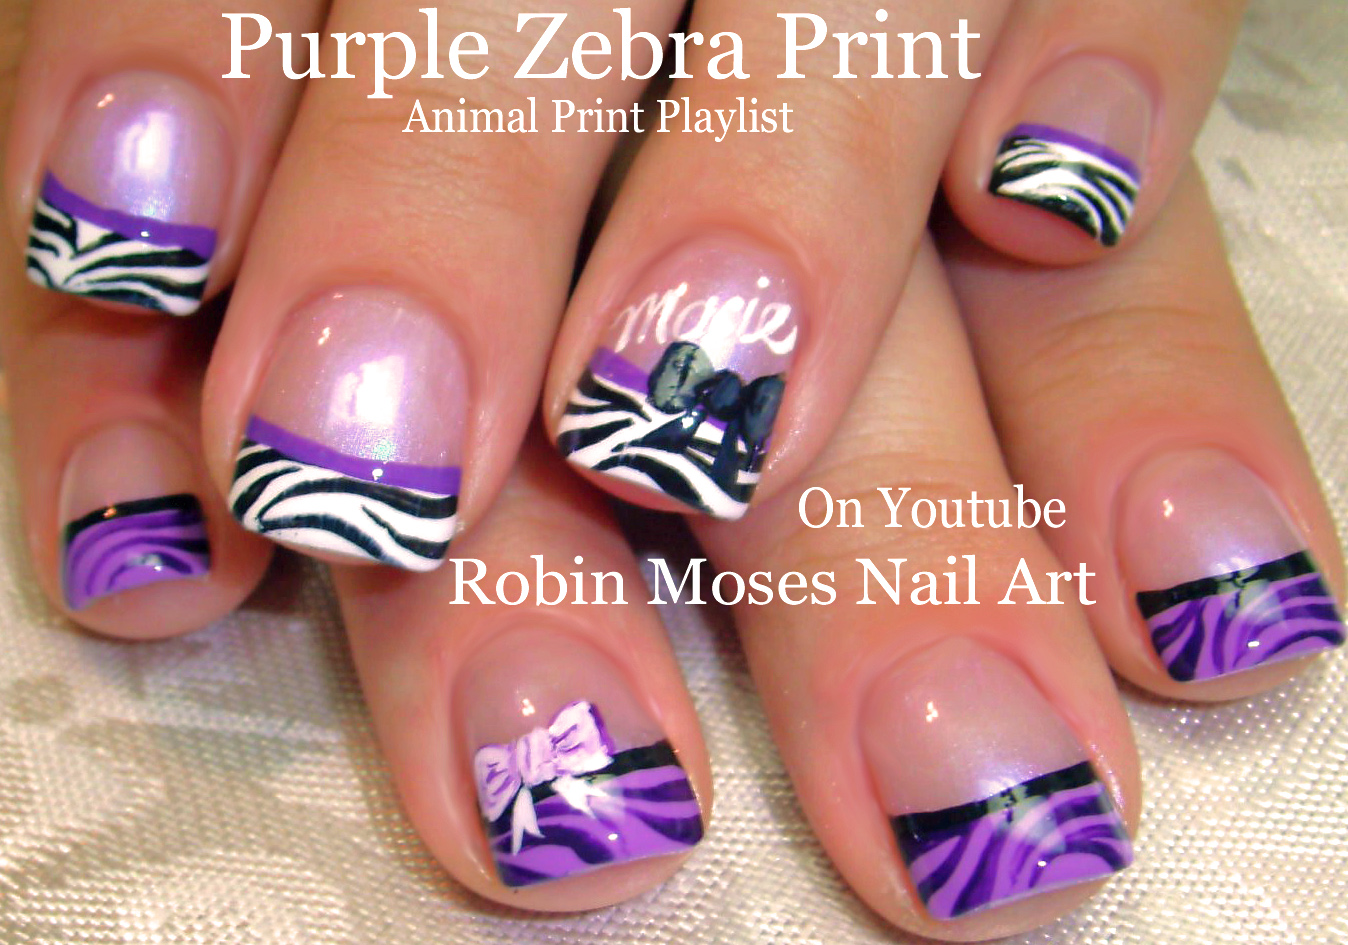 4. Step by Step Black and White Zebra Nail Art - wide 7